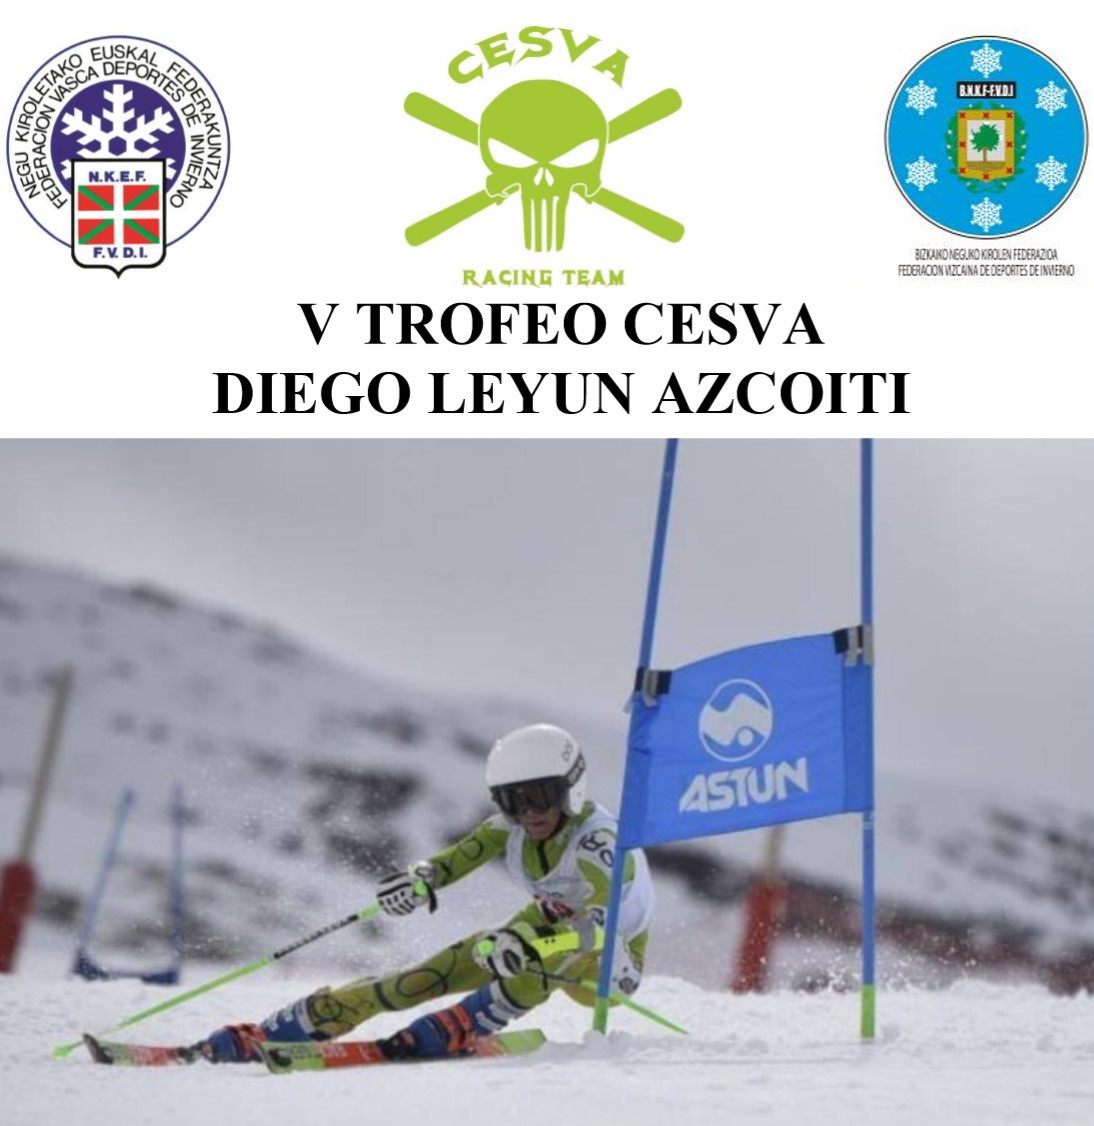 V Trofeo CESVA Diego Leyun Azcoiti